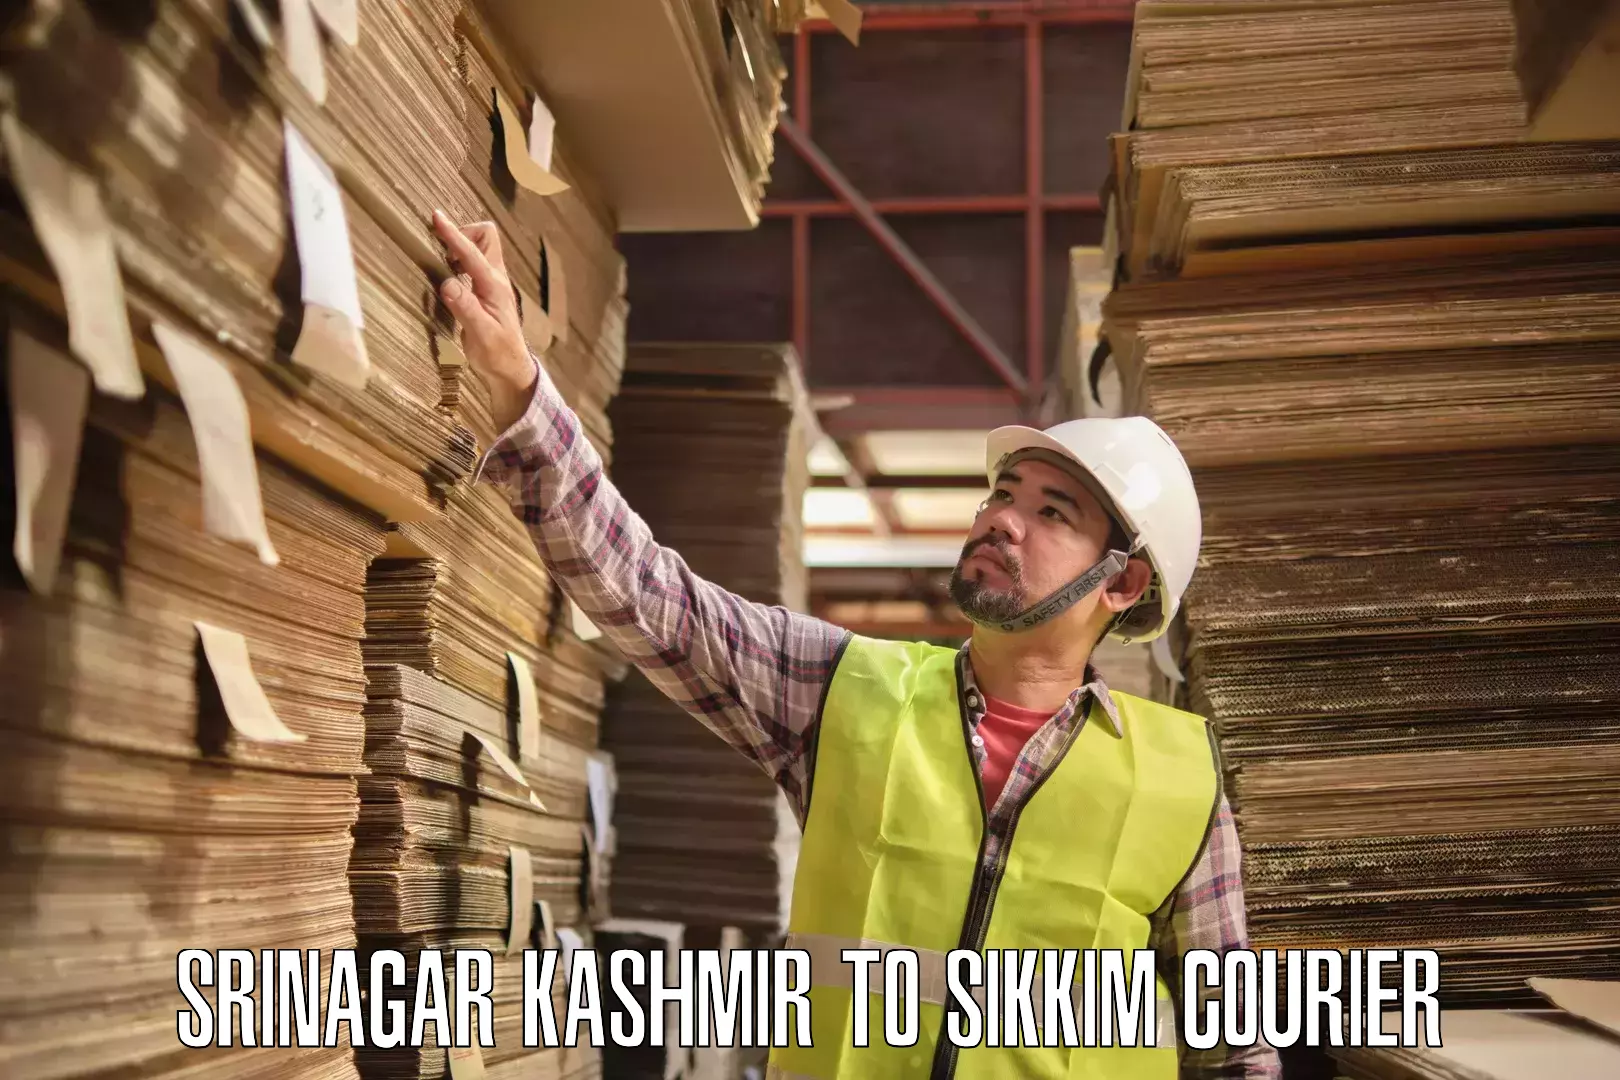 Digital courier platforms Srinagar Kashmir to North Sikkim